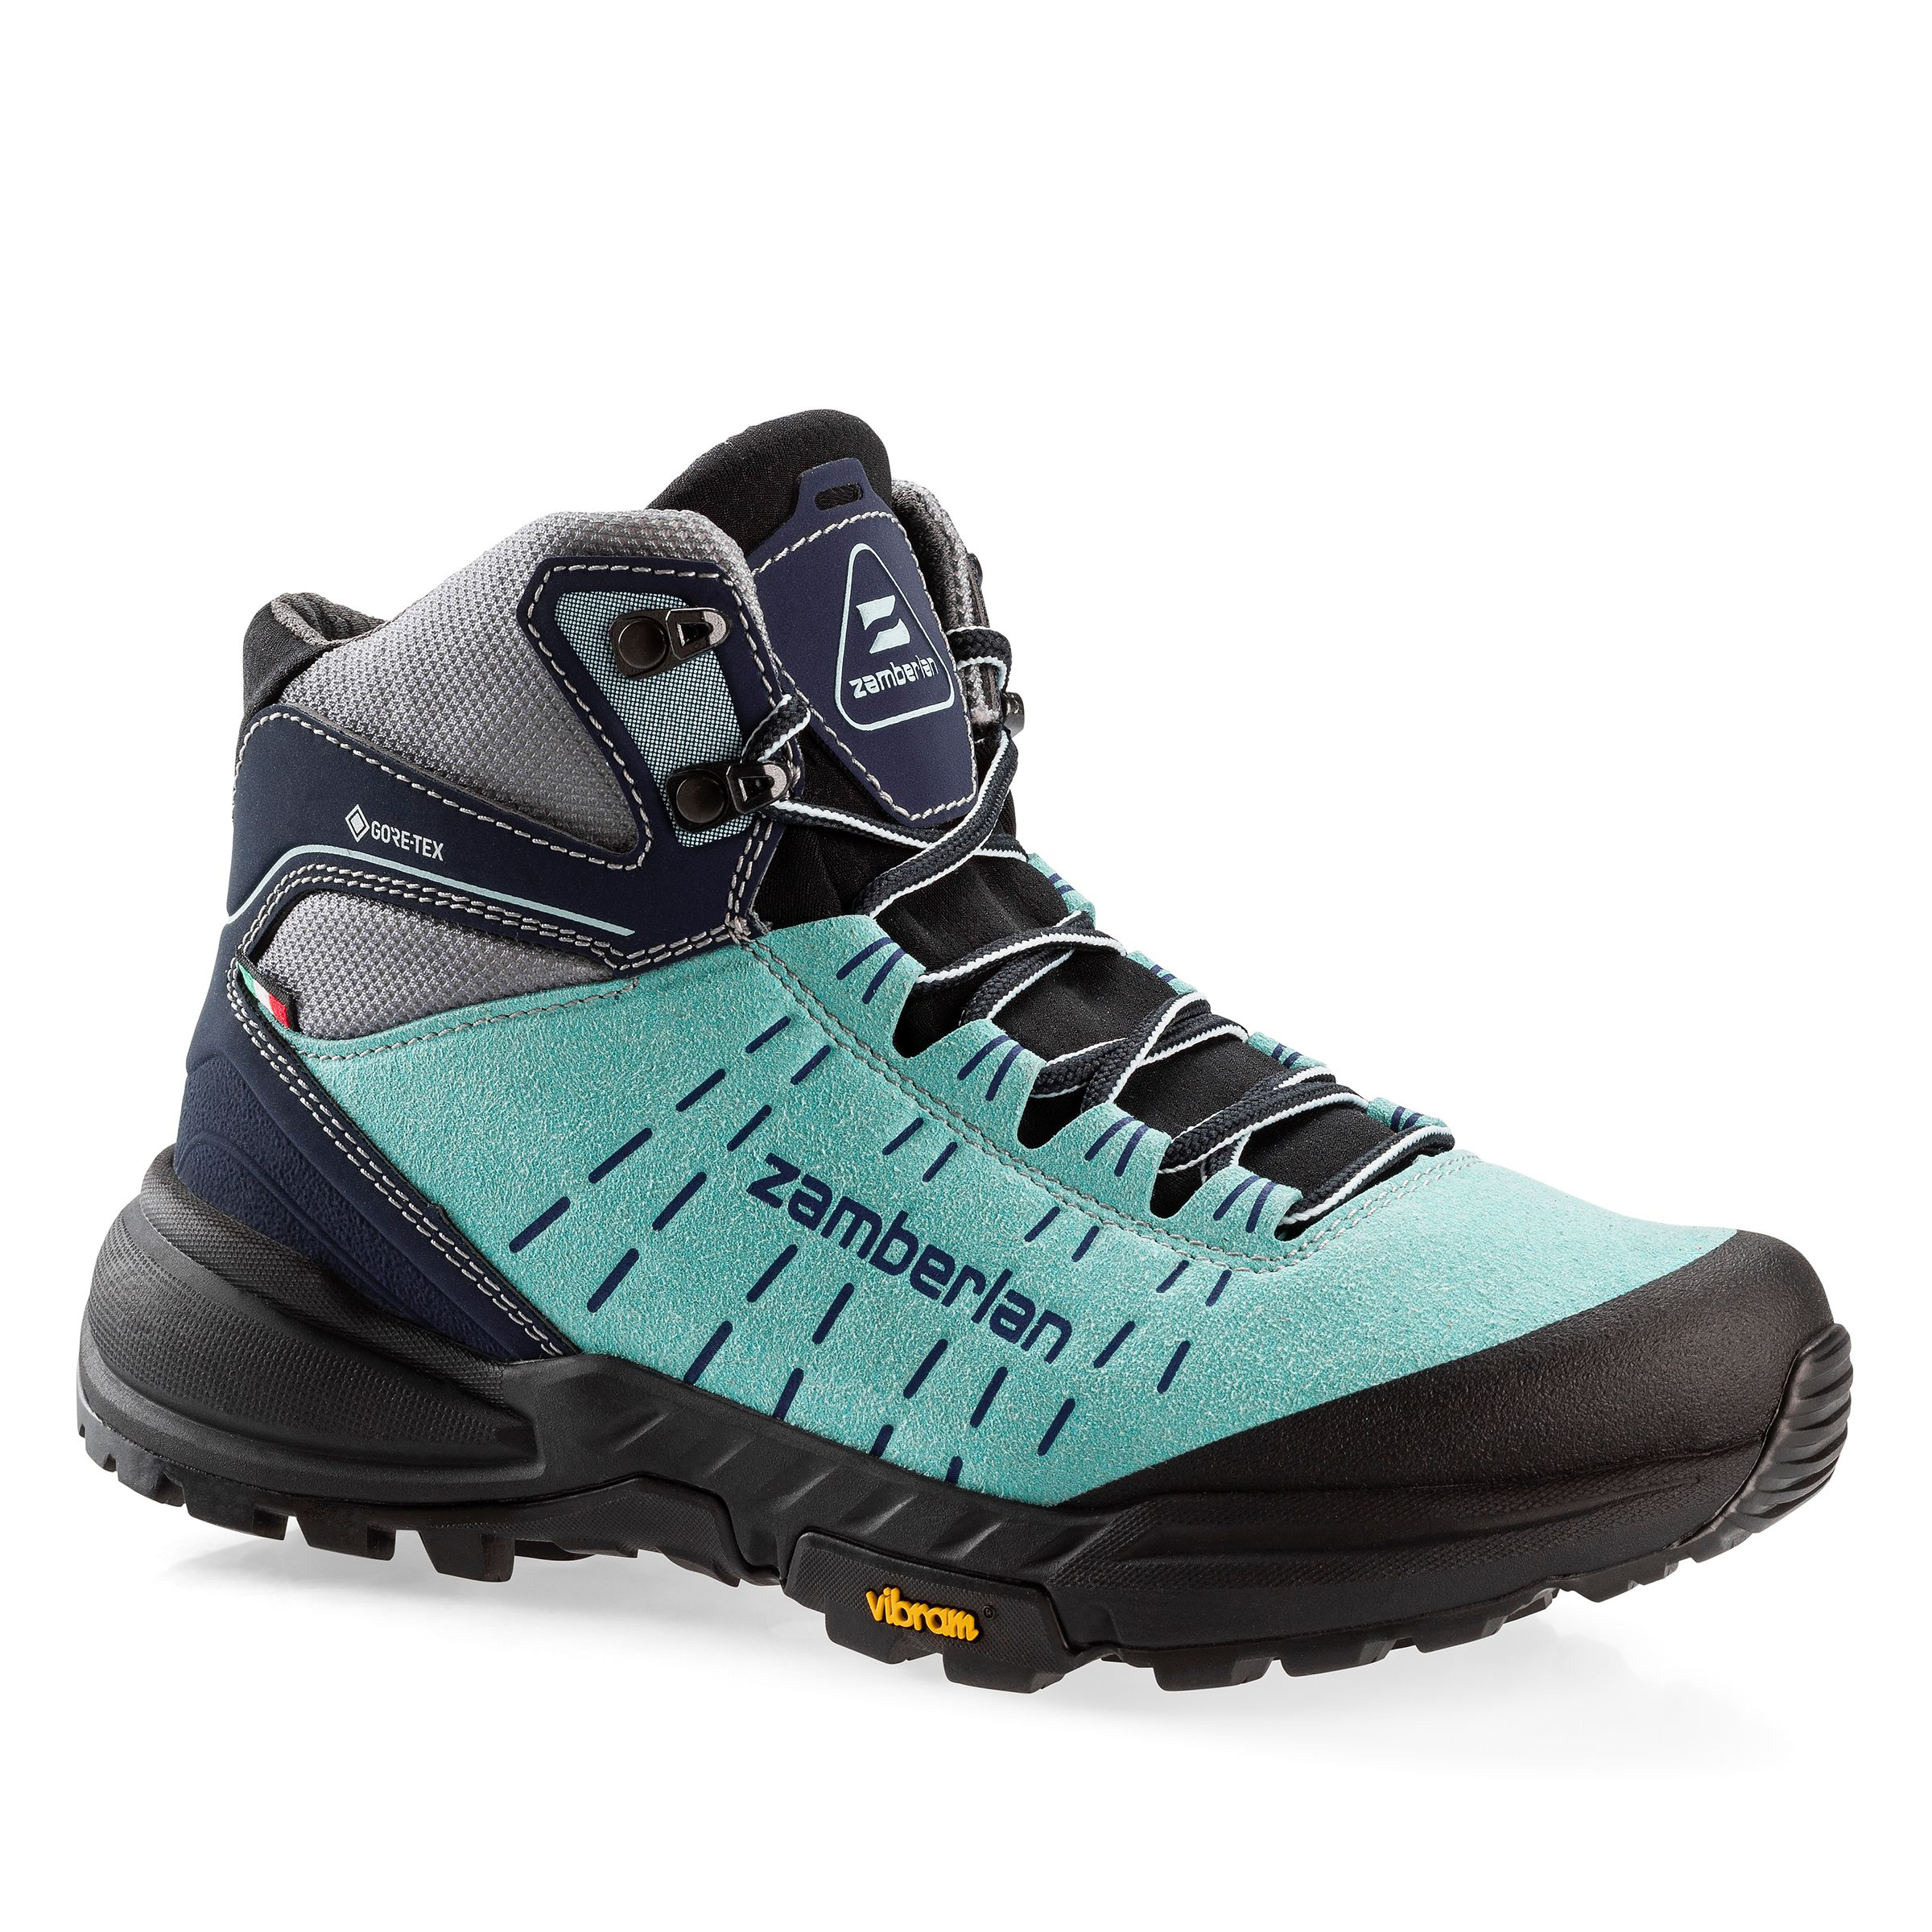 Zamberlan 334 Circe GTX Waterproof Hiking Boots for Ladies - Blue - 9.5M